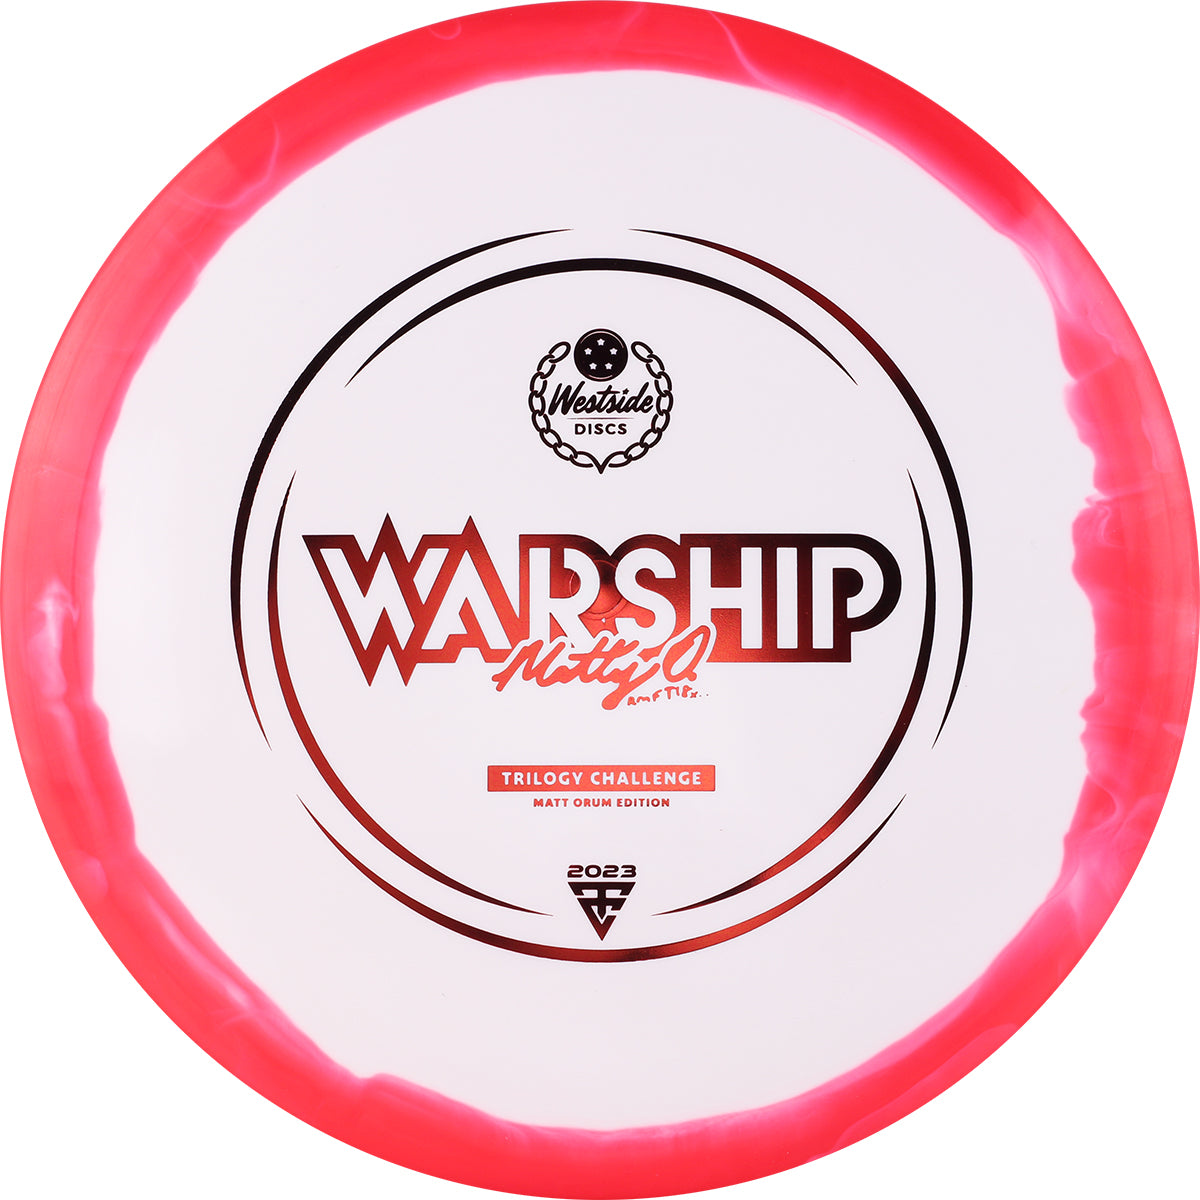 Tournament Orbit Warship - Trilogy Challenge 2023 (6931242516545)